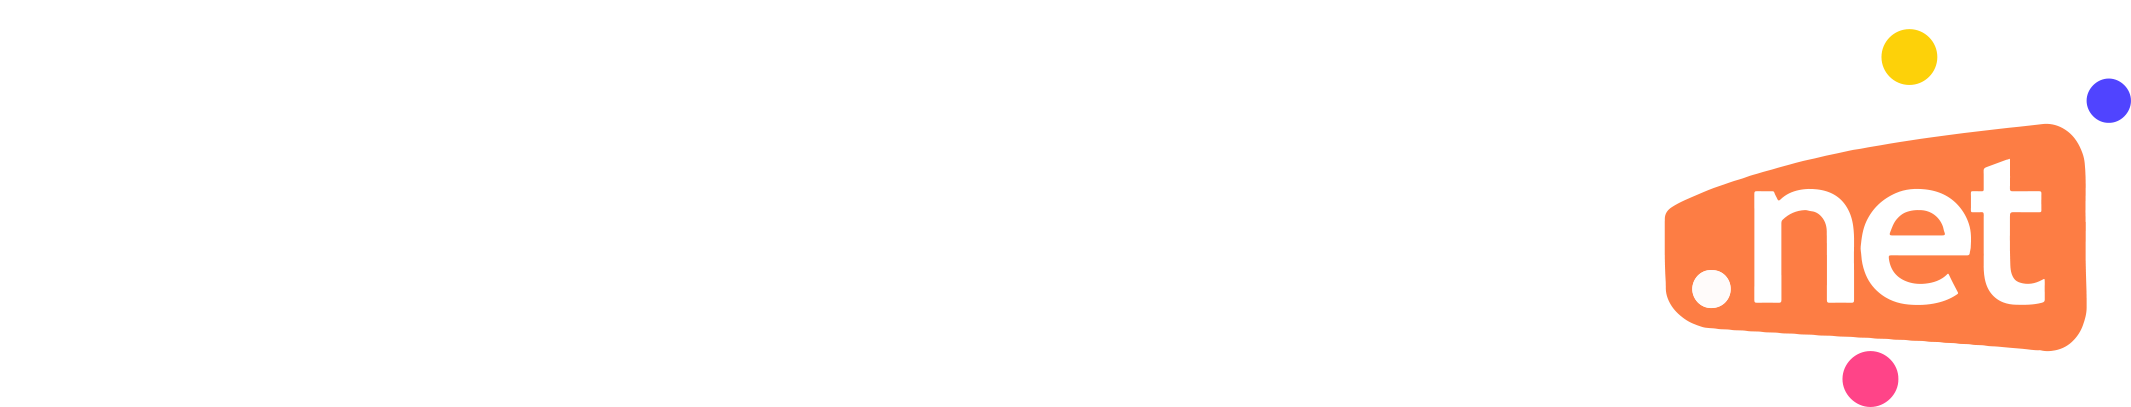 hayvanlar-logo.png